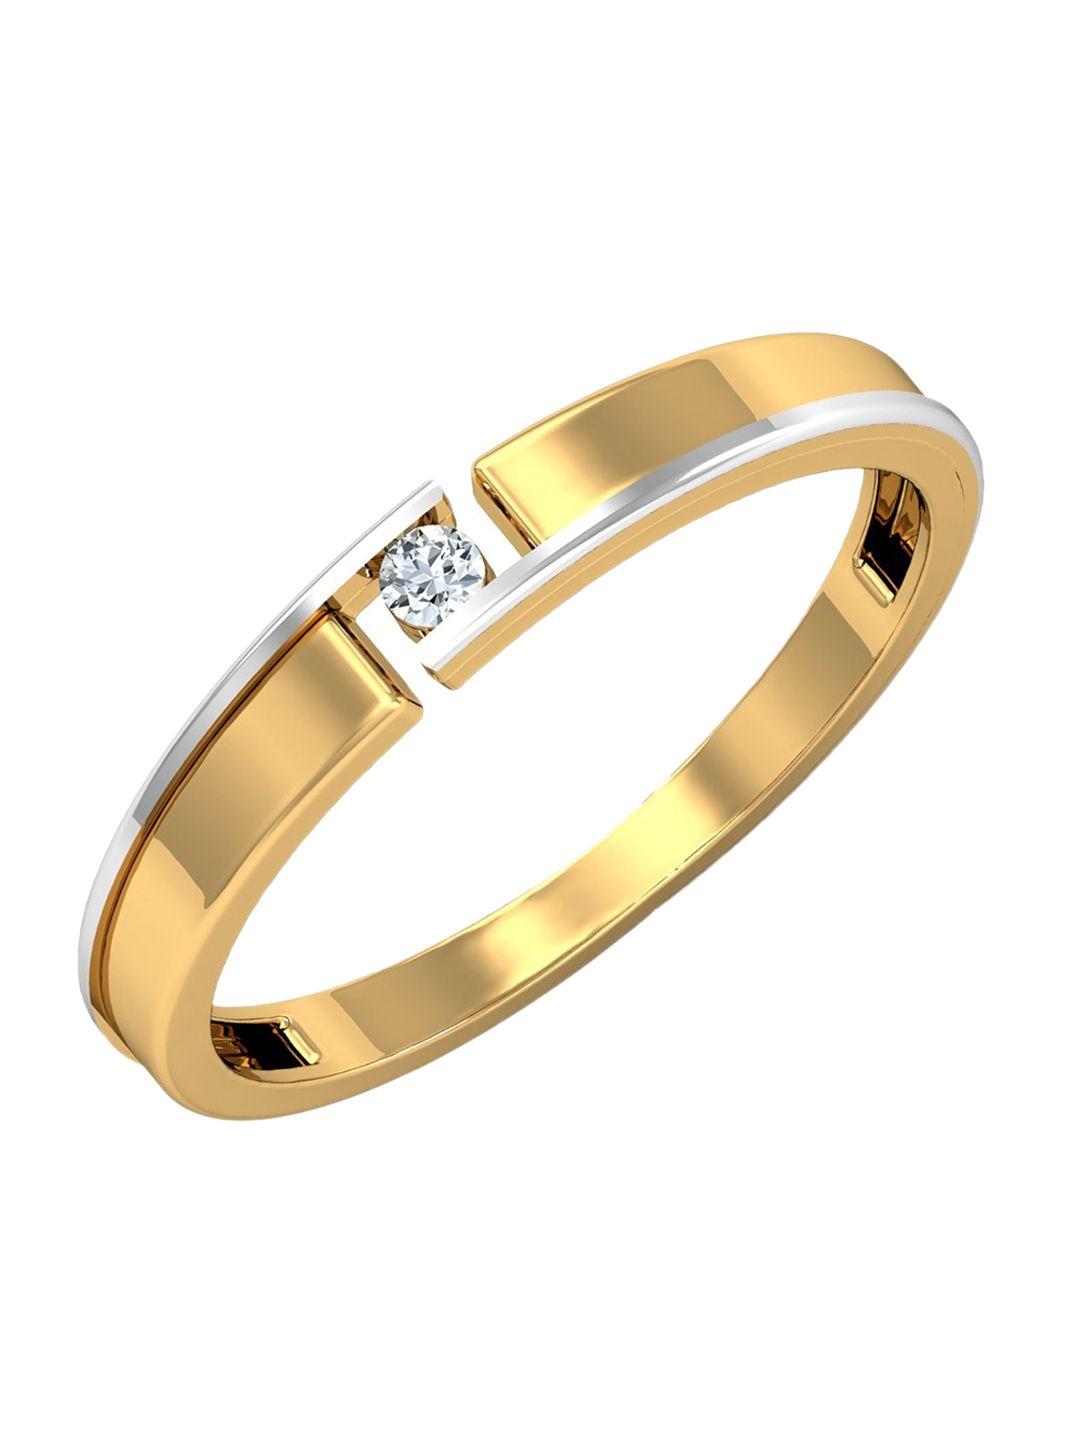 kuberbox 18kt gold diamond studded ring-1.36gm